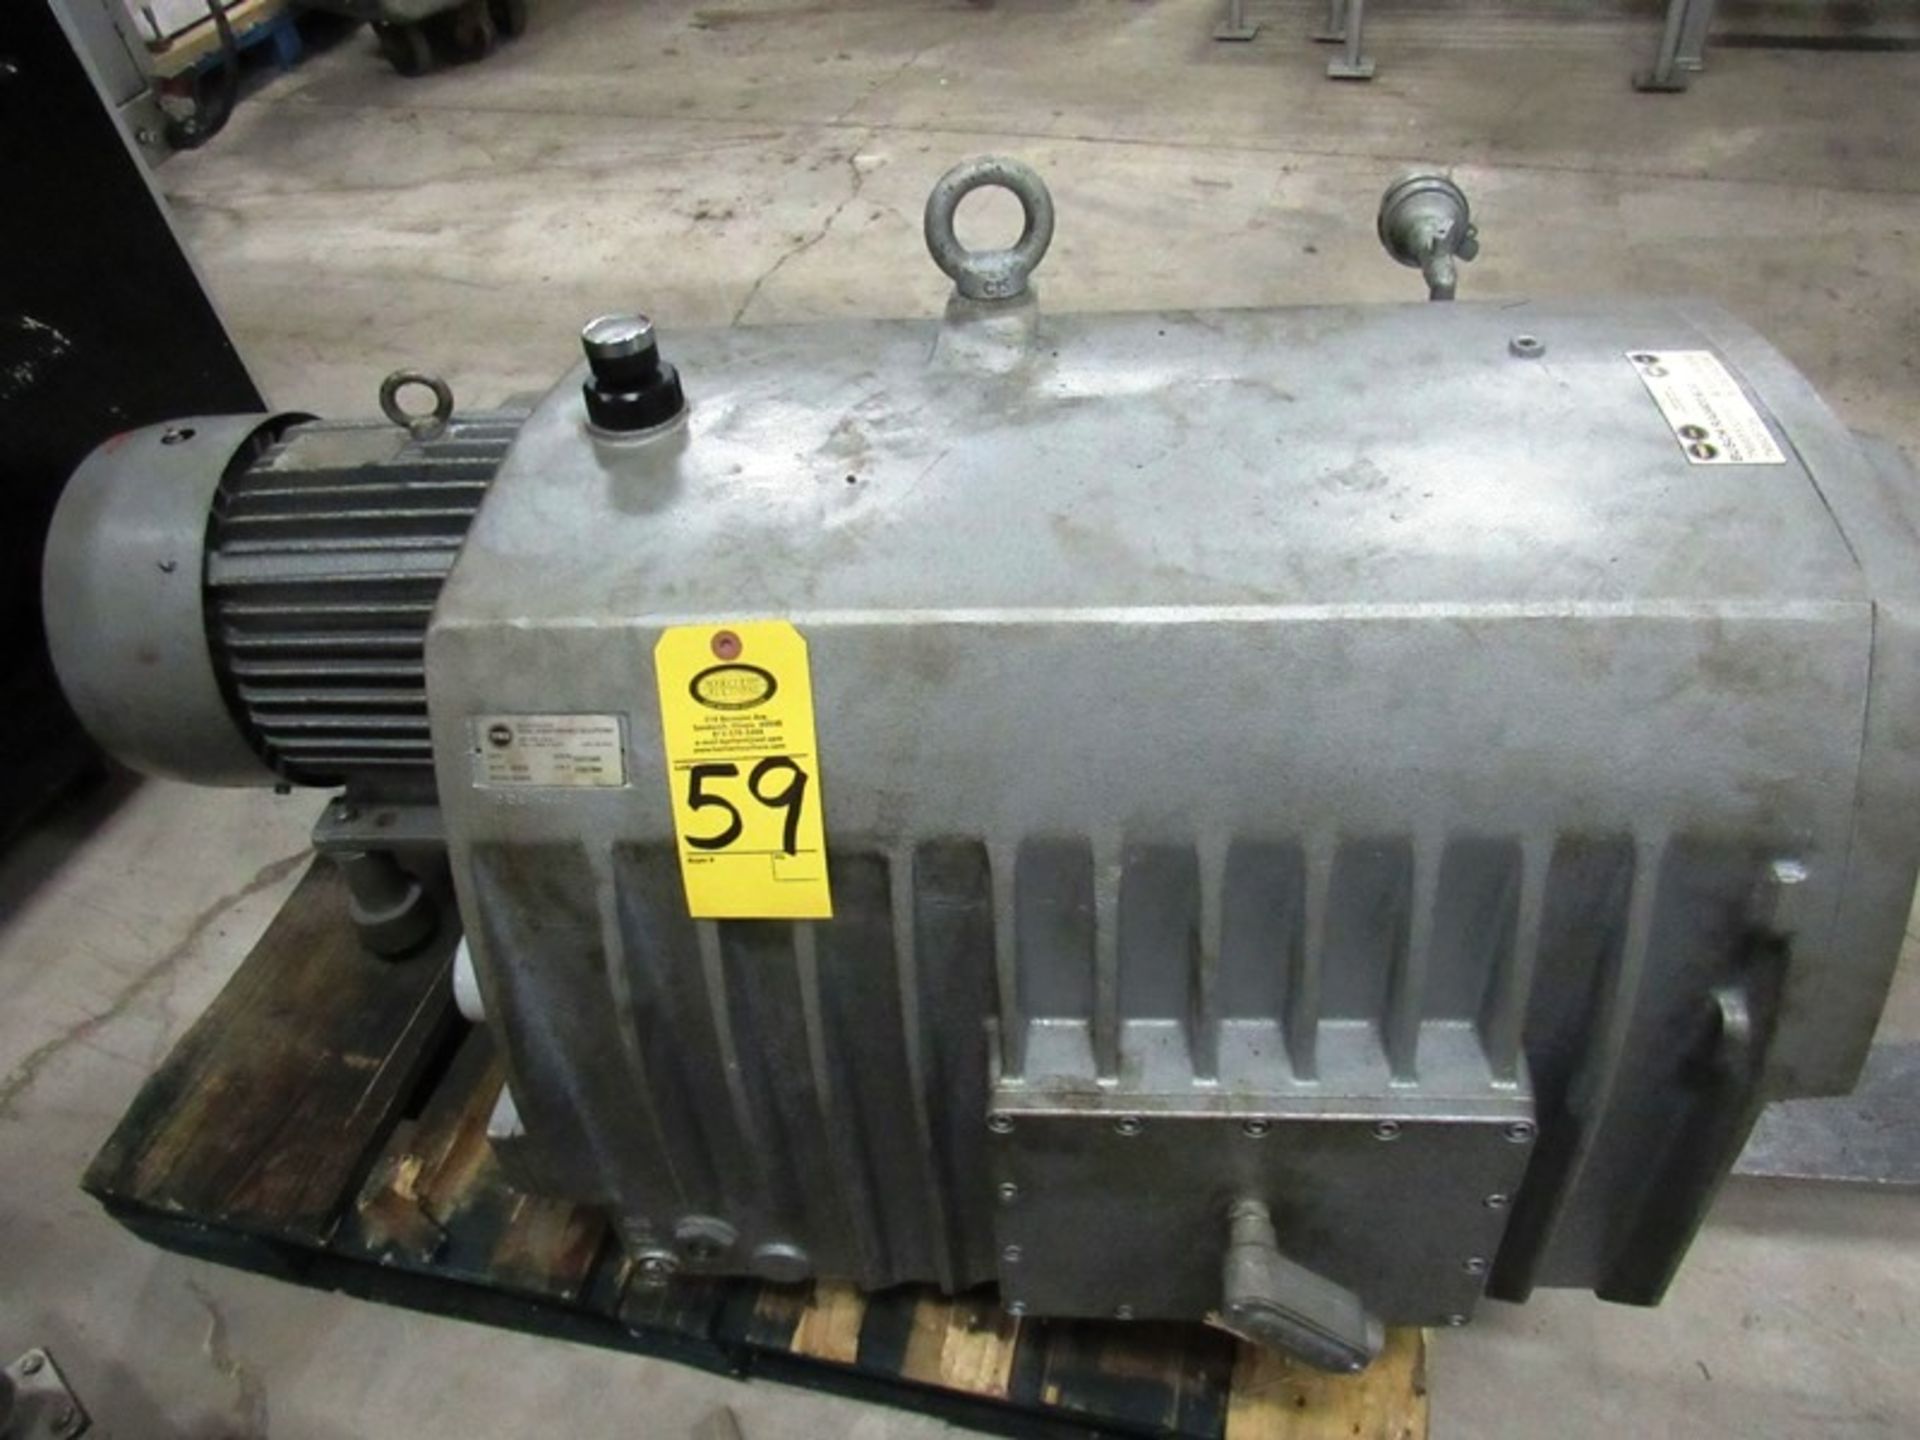 Busch Mdl. RAO400 Vacuum Pump, Ser. #5592486, 15 h.p., 230/460 volts (Rebuilt by TMS)